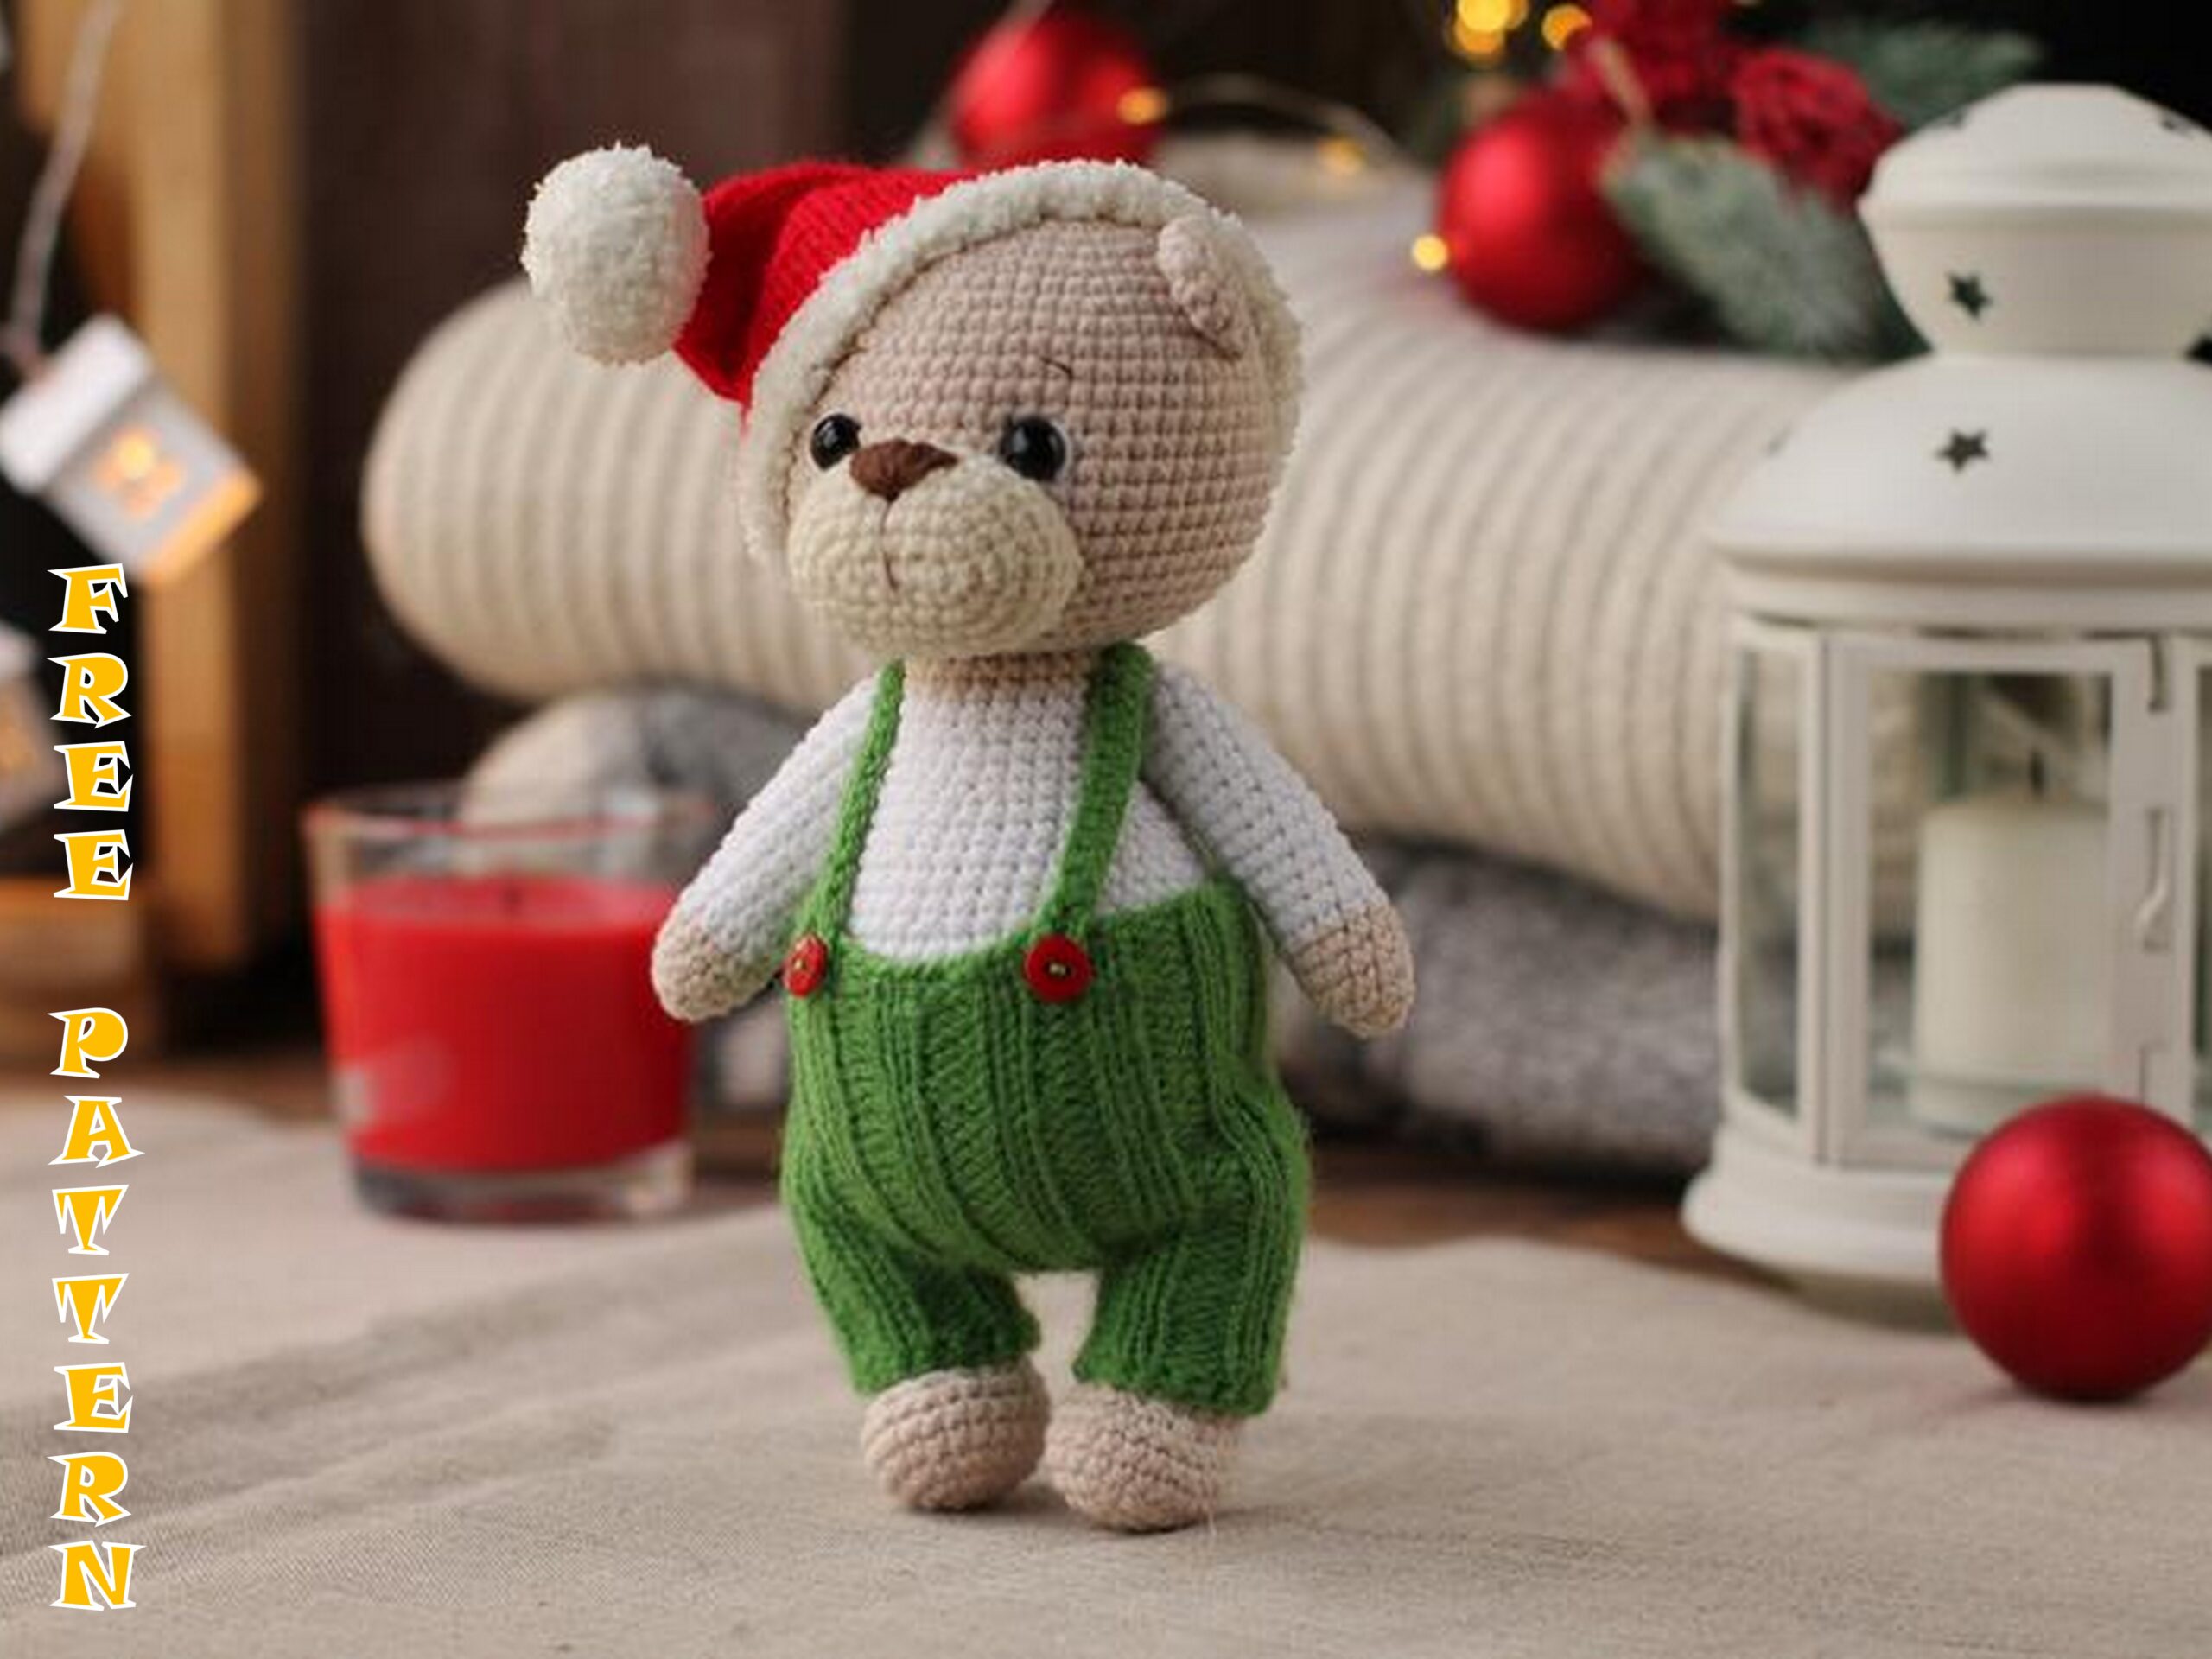 Crochet Patterns for Christmas: An Amigurumi Christmas Crochet